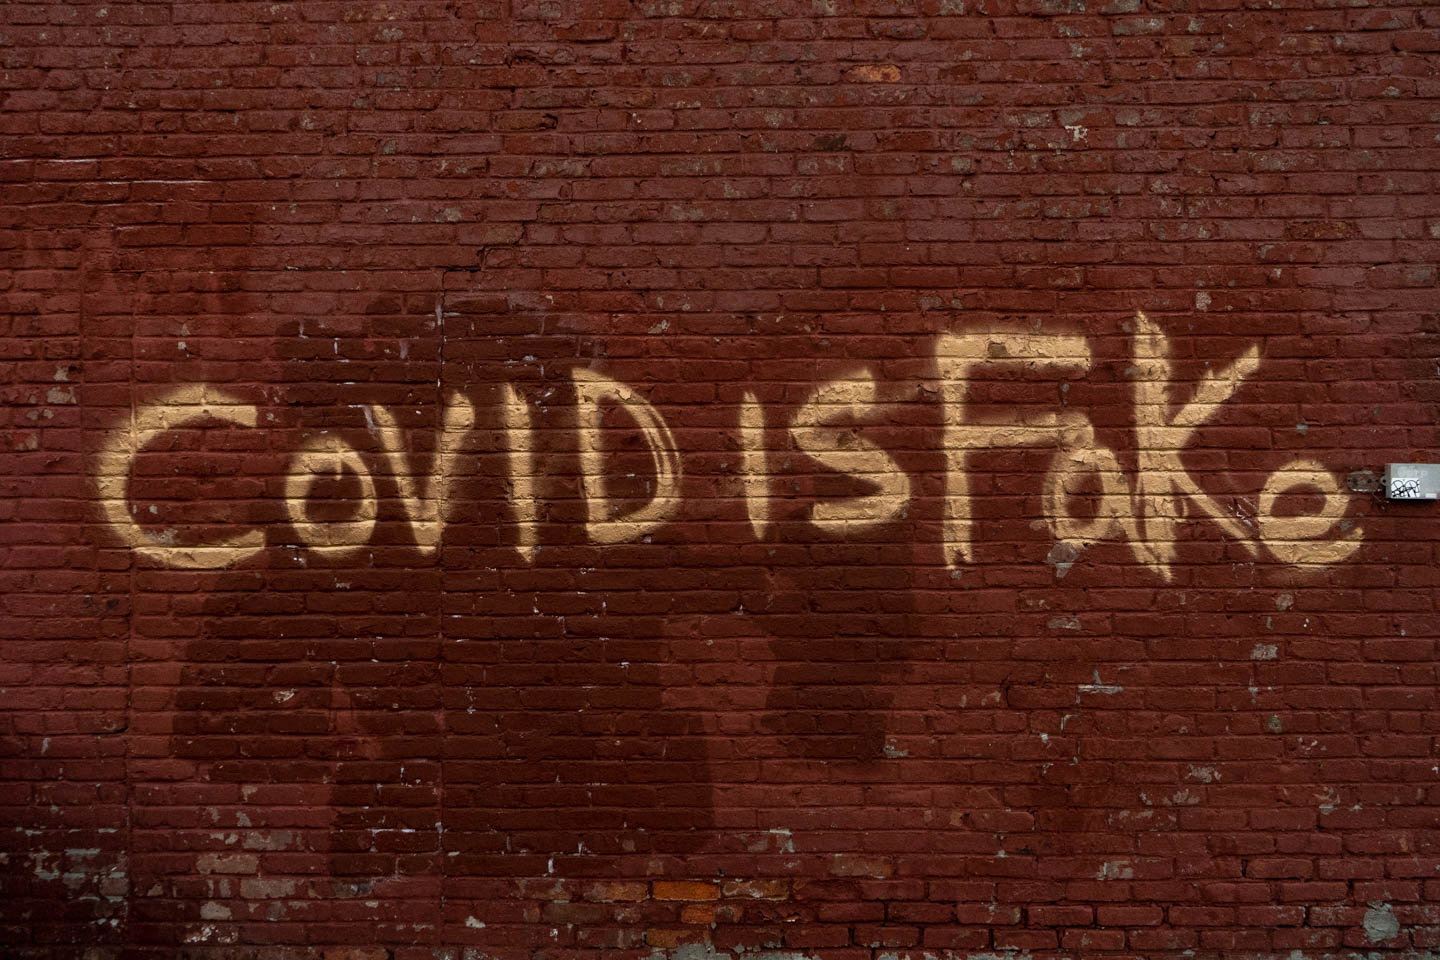 September 22, 2020: “Covid is Fake” graffiti. East 146th Street at Third Avenue, Bronx, New York. © Camilo José Vergara